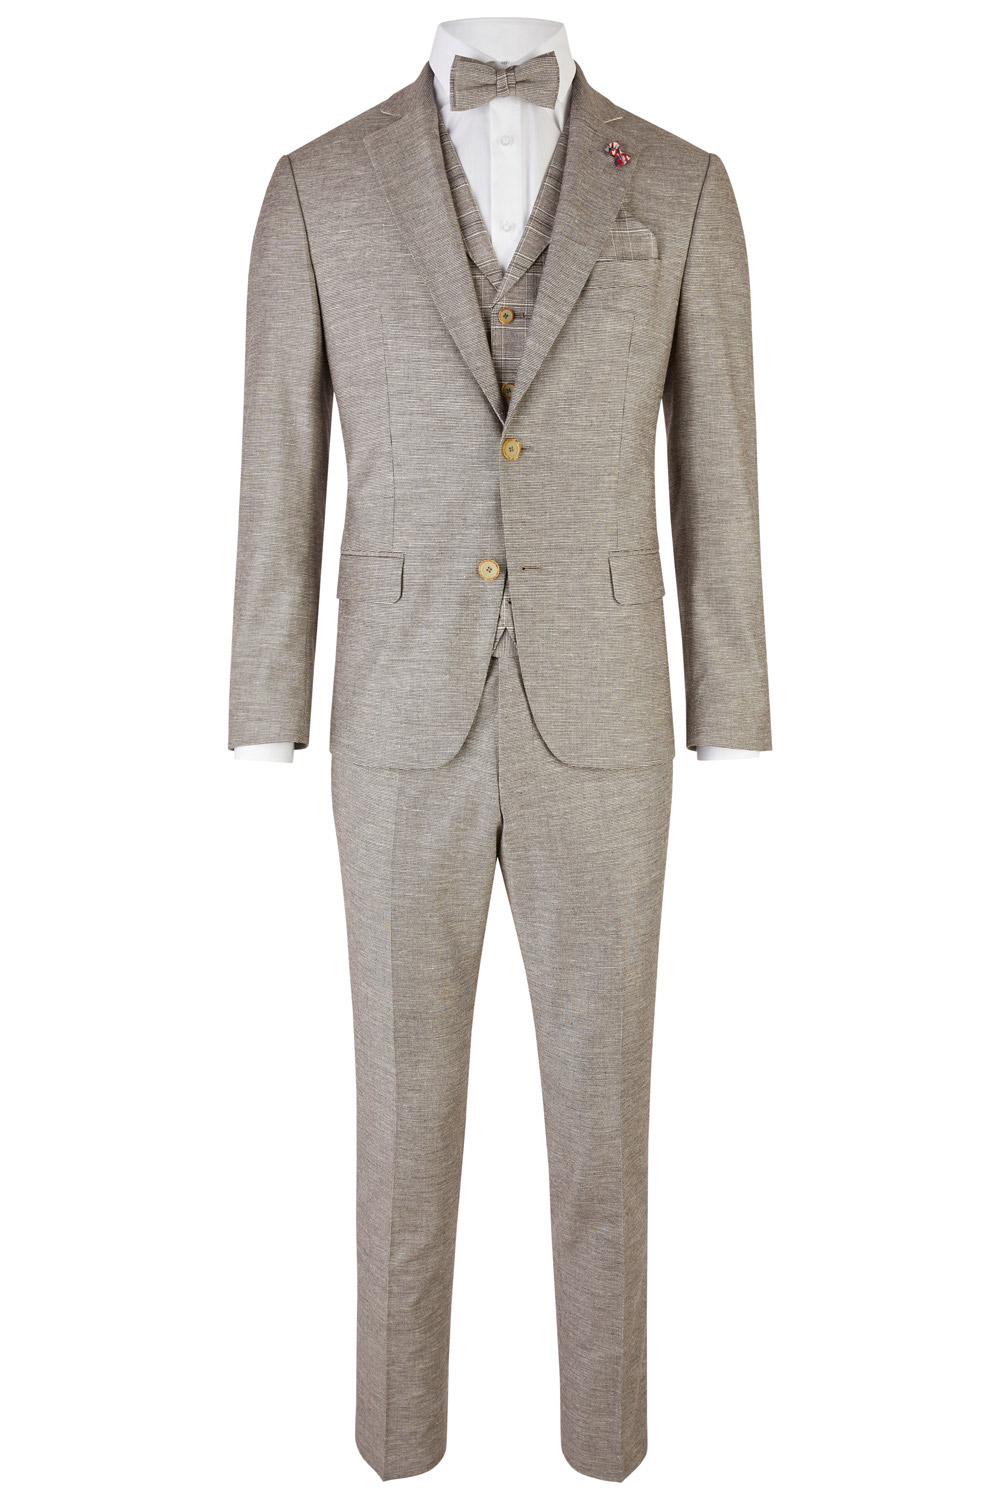 Vintage Grey 3 Piece Wedding Suit - Tom Murphy's Formal and Menswear